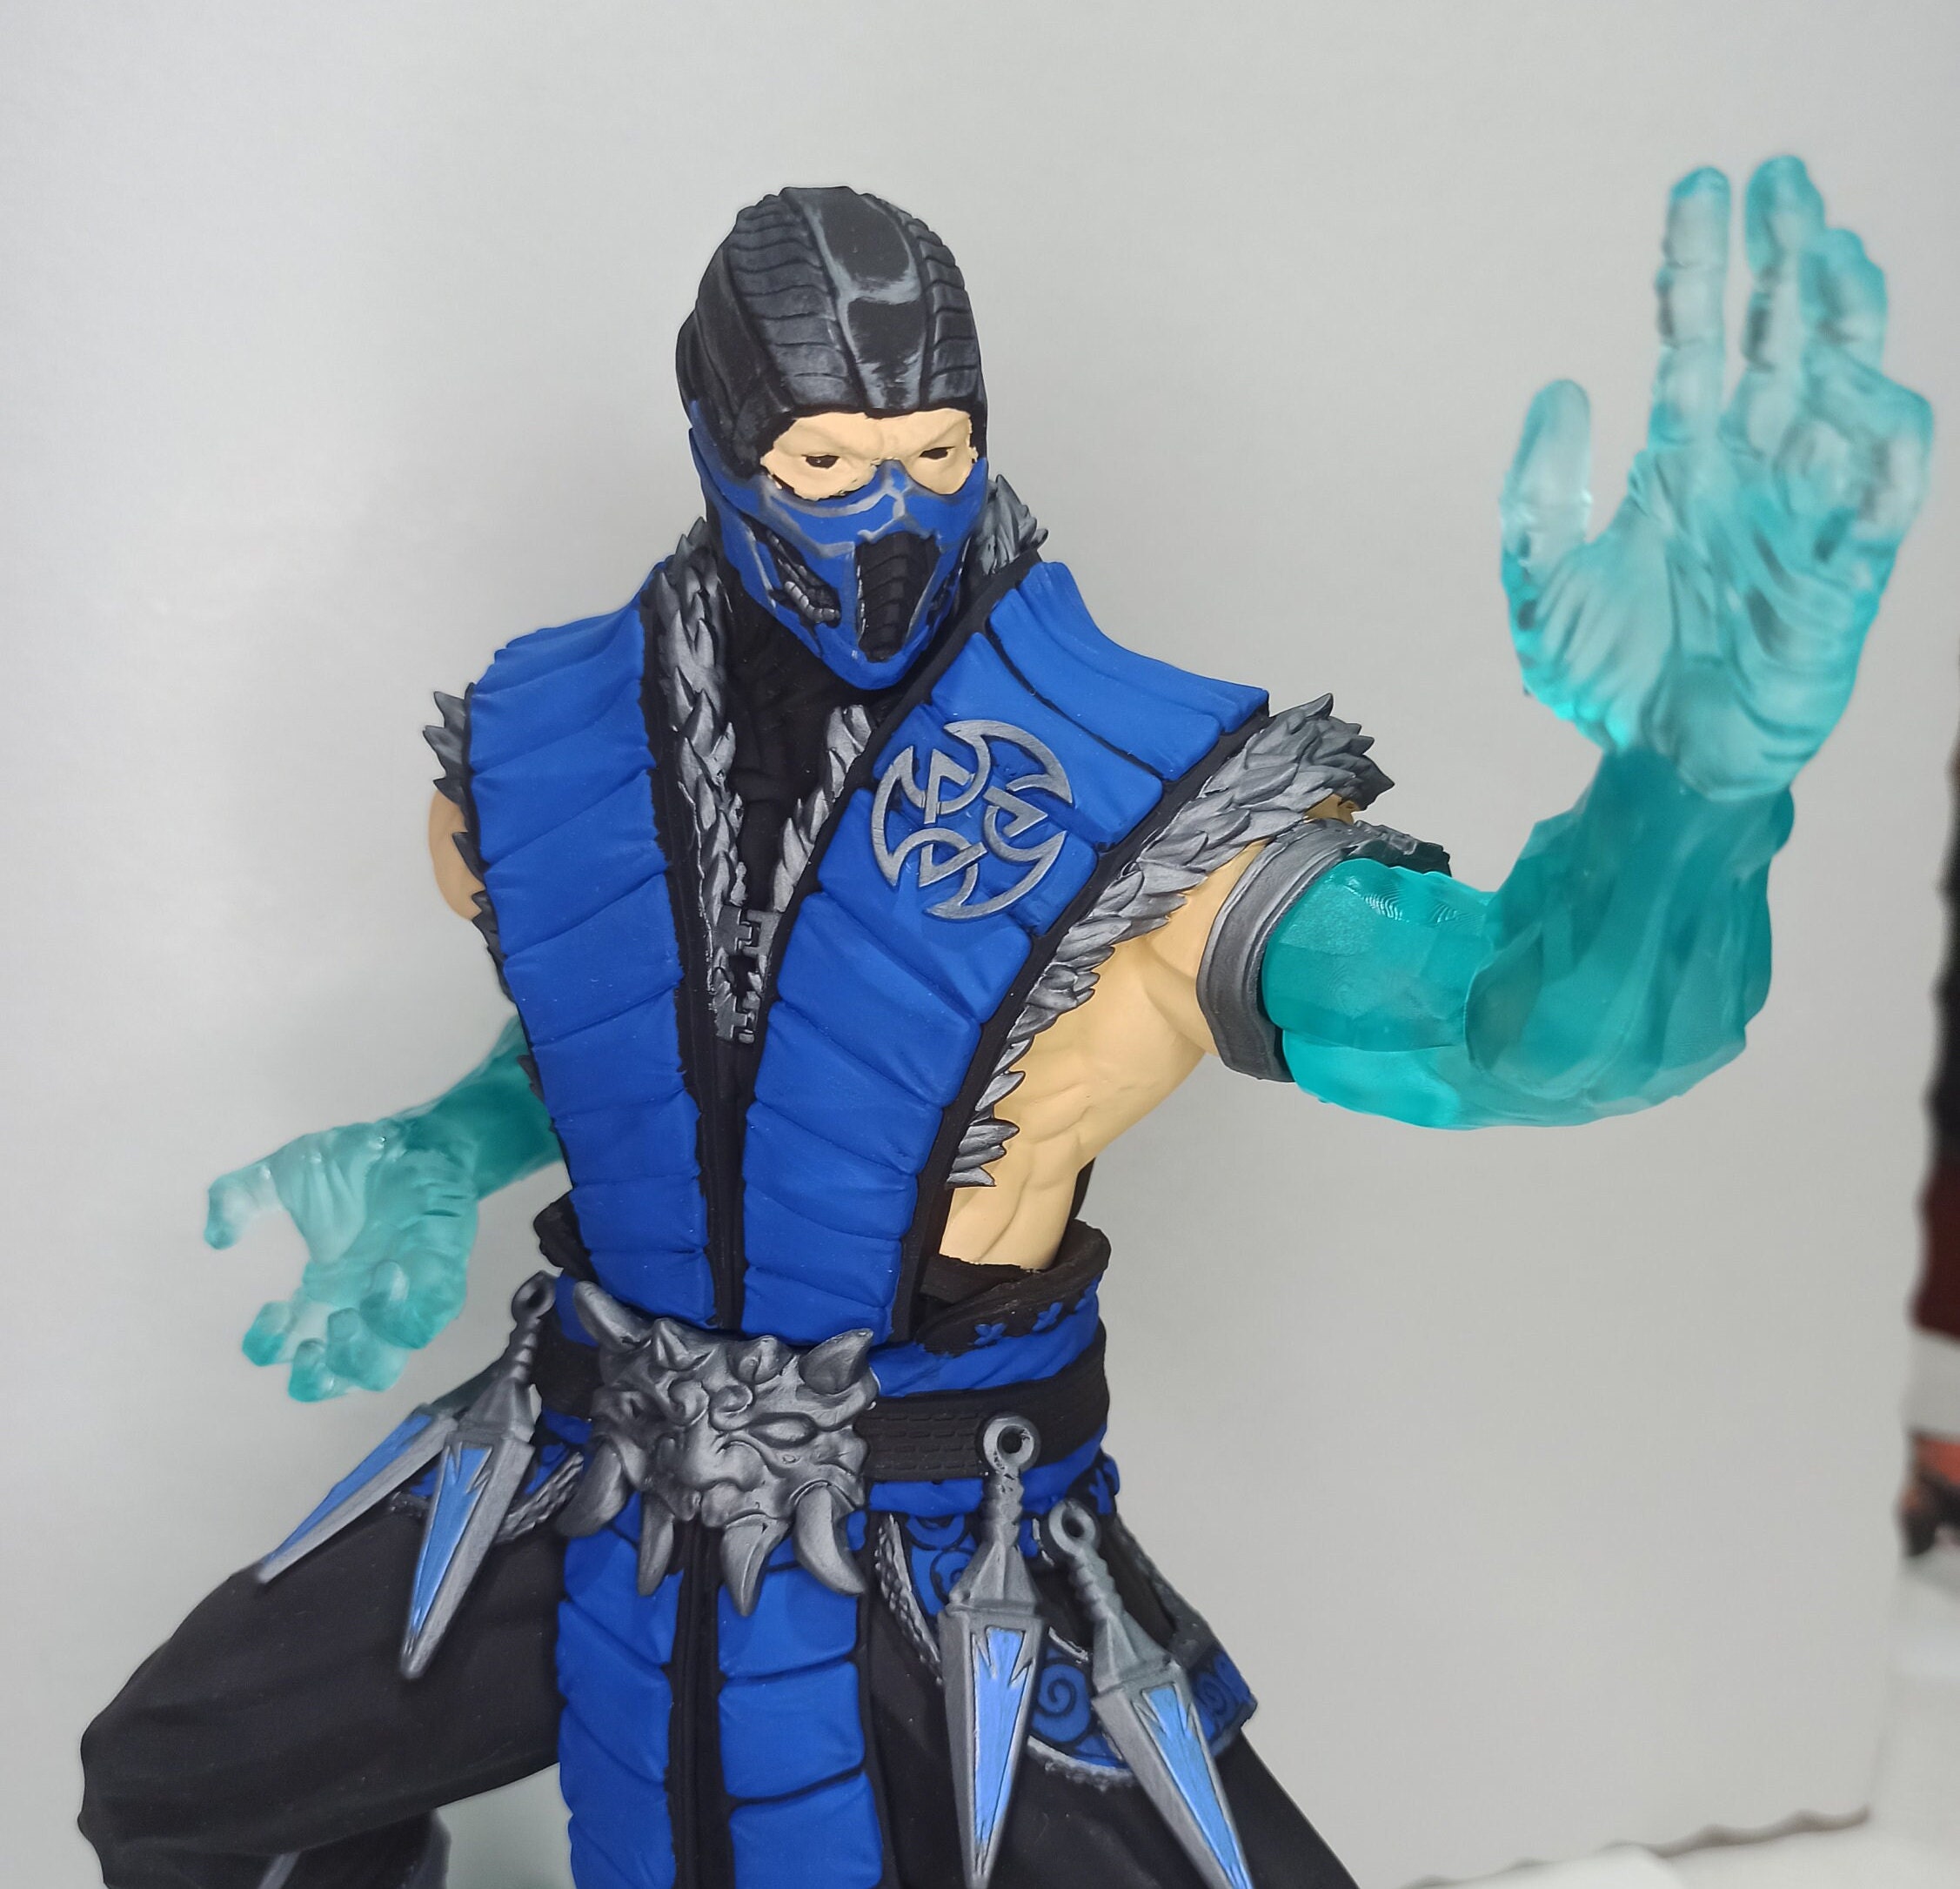 ArtStation - BARAKA Action Figure 1:12 Mortal Kombat (Storm